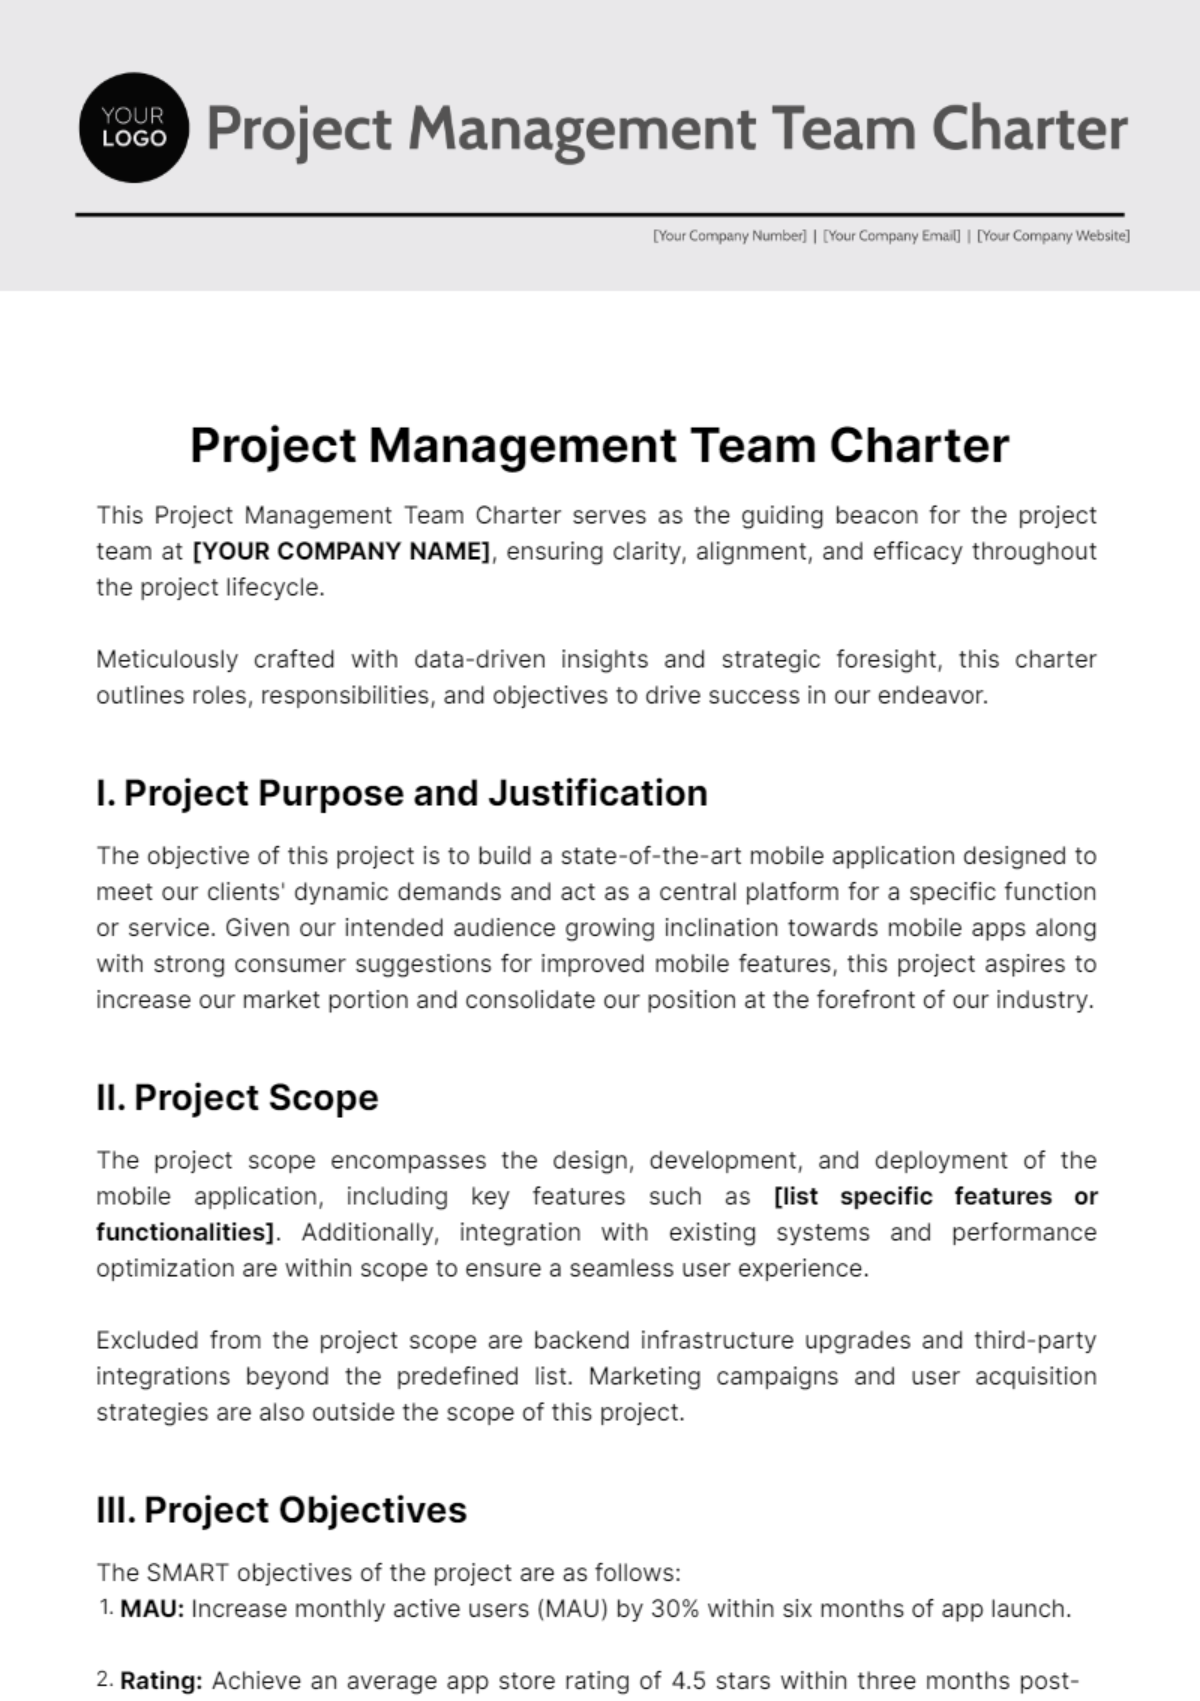 Project Management Team Charter Template